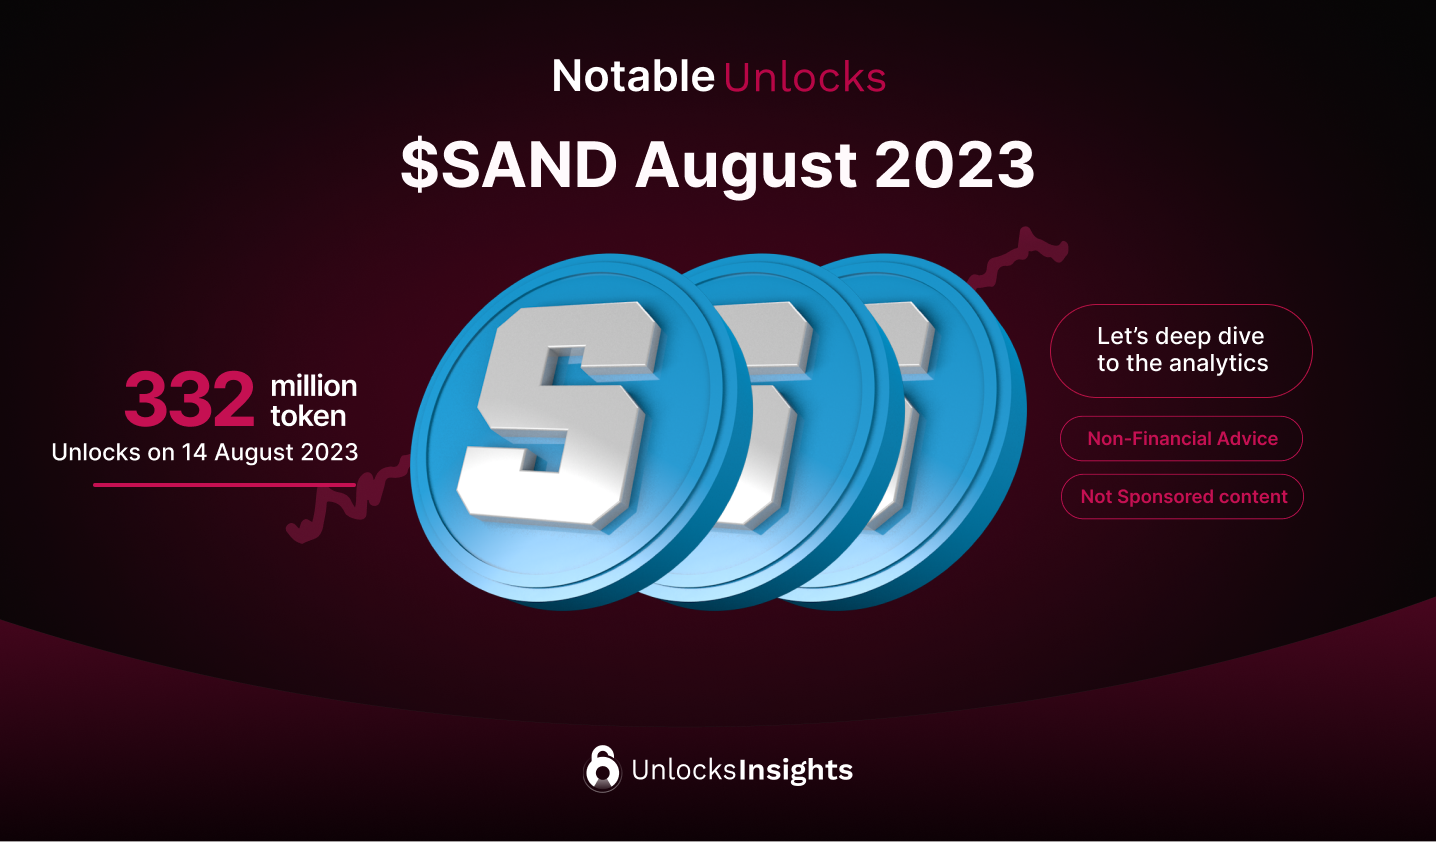 Notable Unlocks: 322M $SAND 2023 Unlocks, the last investors unlock.